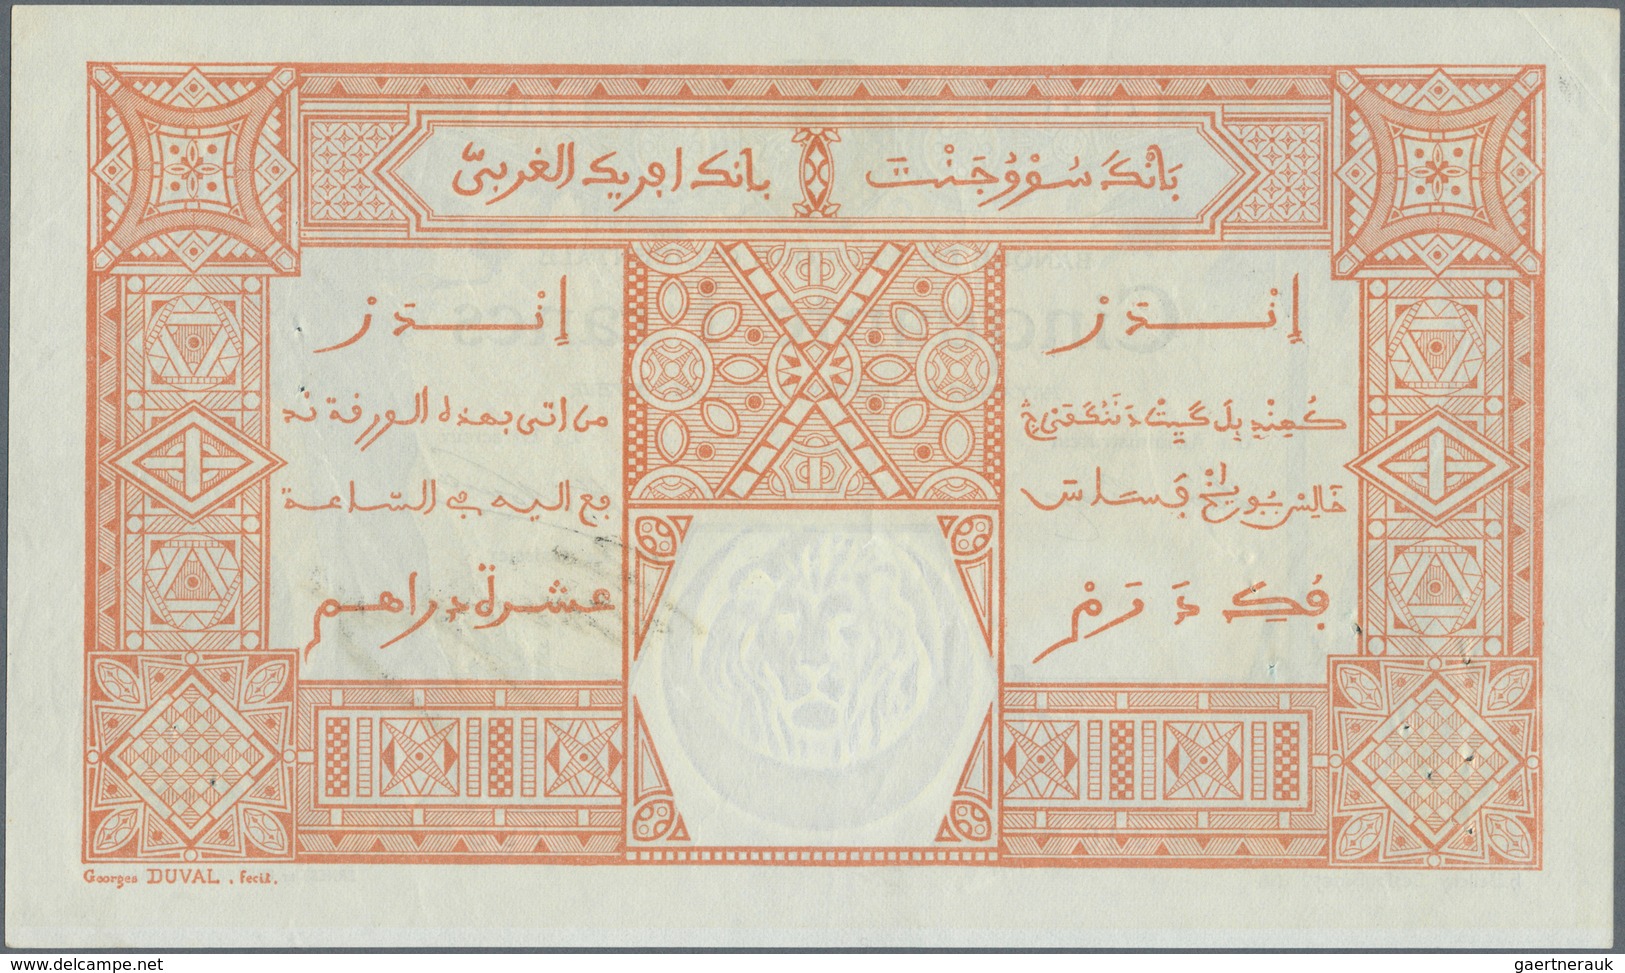 French West Africa / Französisch Westafrika: 50 Francs 1919 DAKAR P. 9Ba, Very Rare Early Date In Ex - West African States